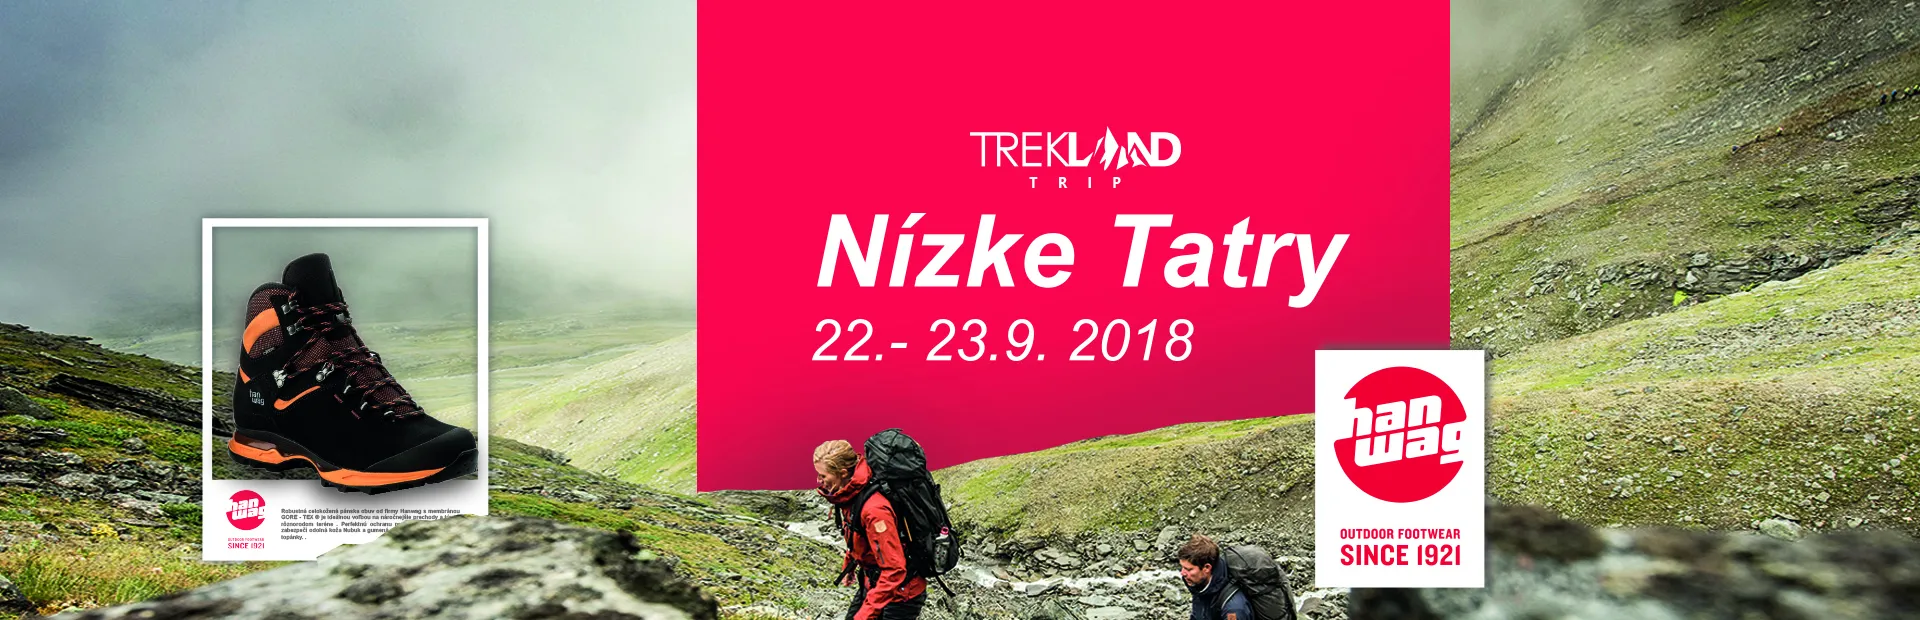 14. Trekland trip - Nízke Tatry